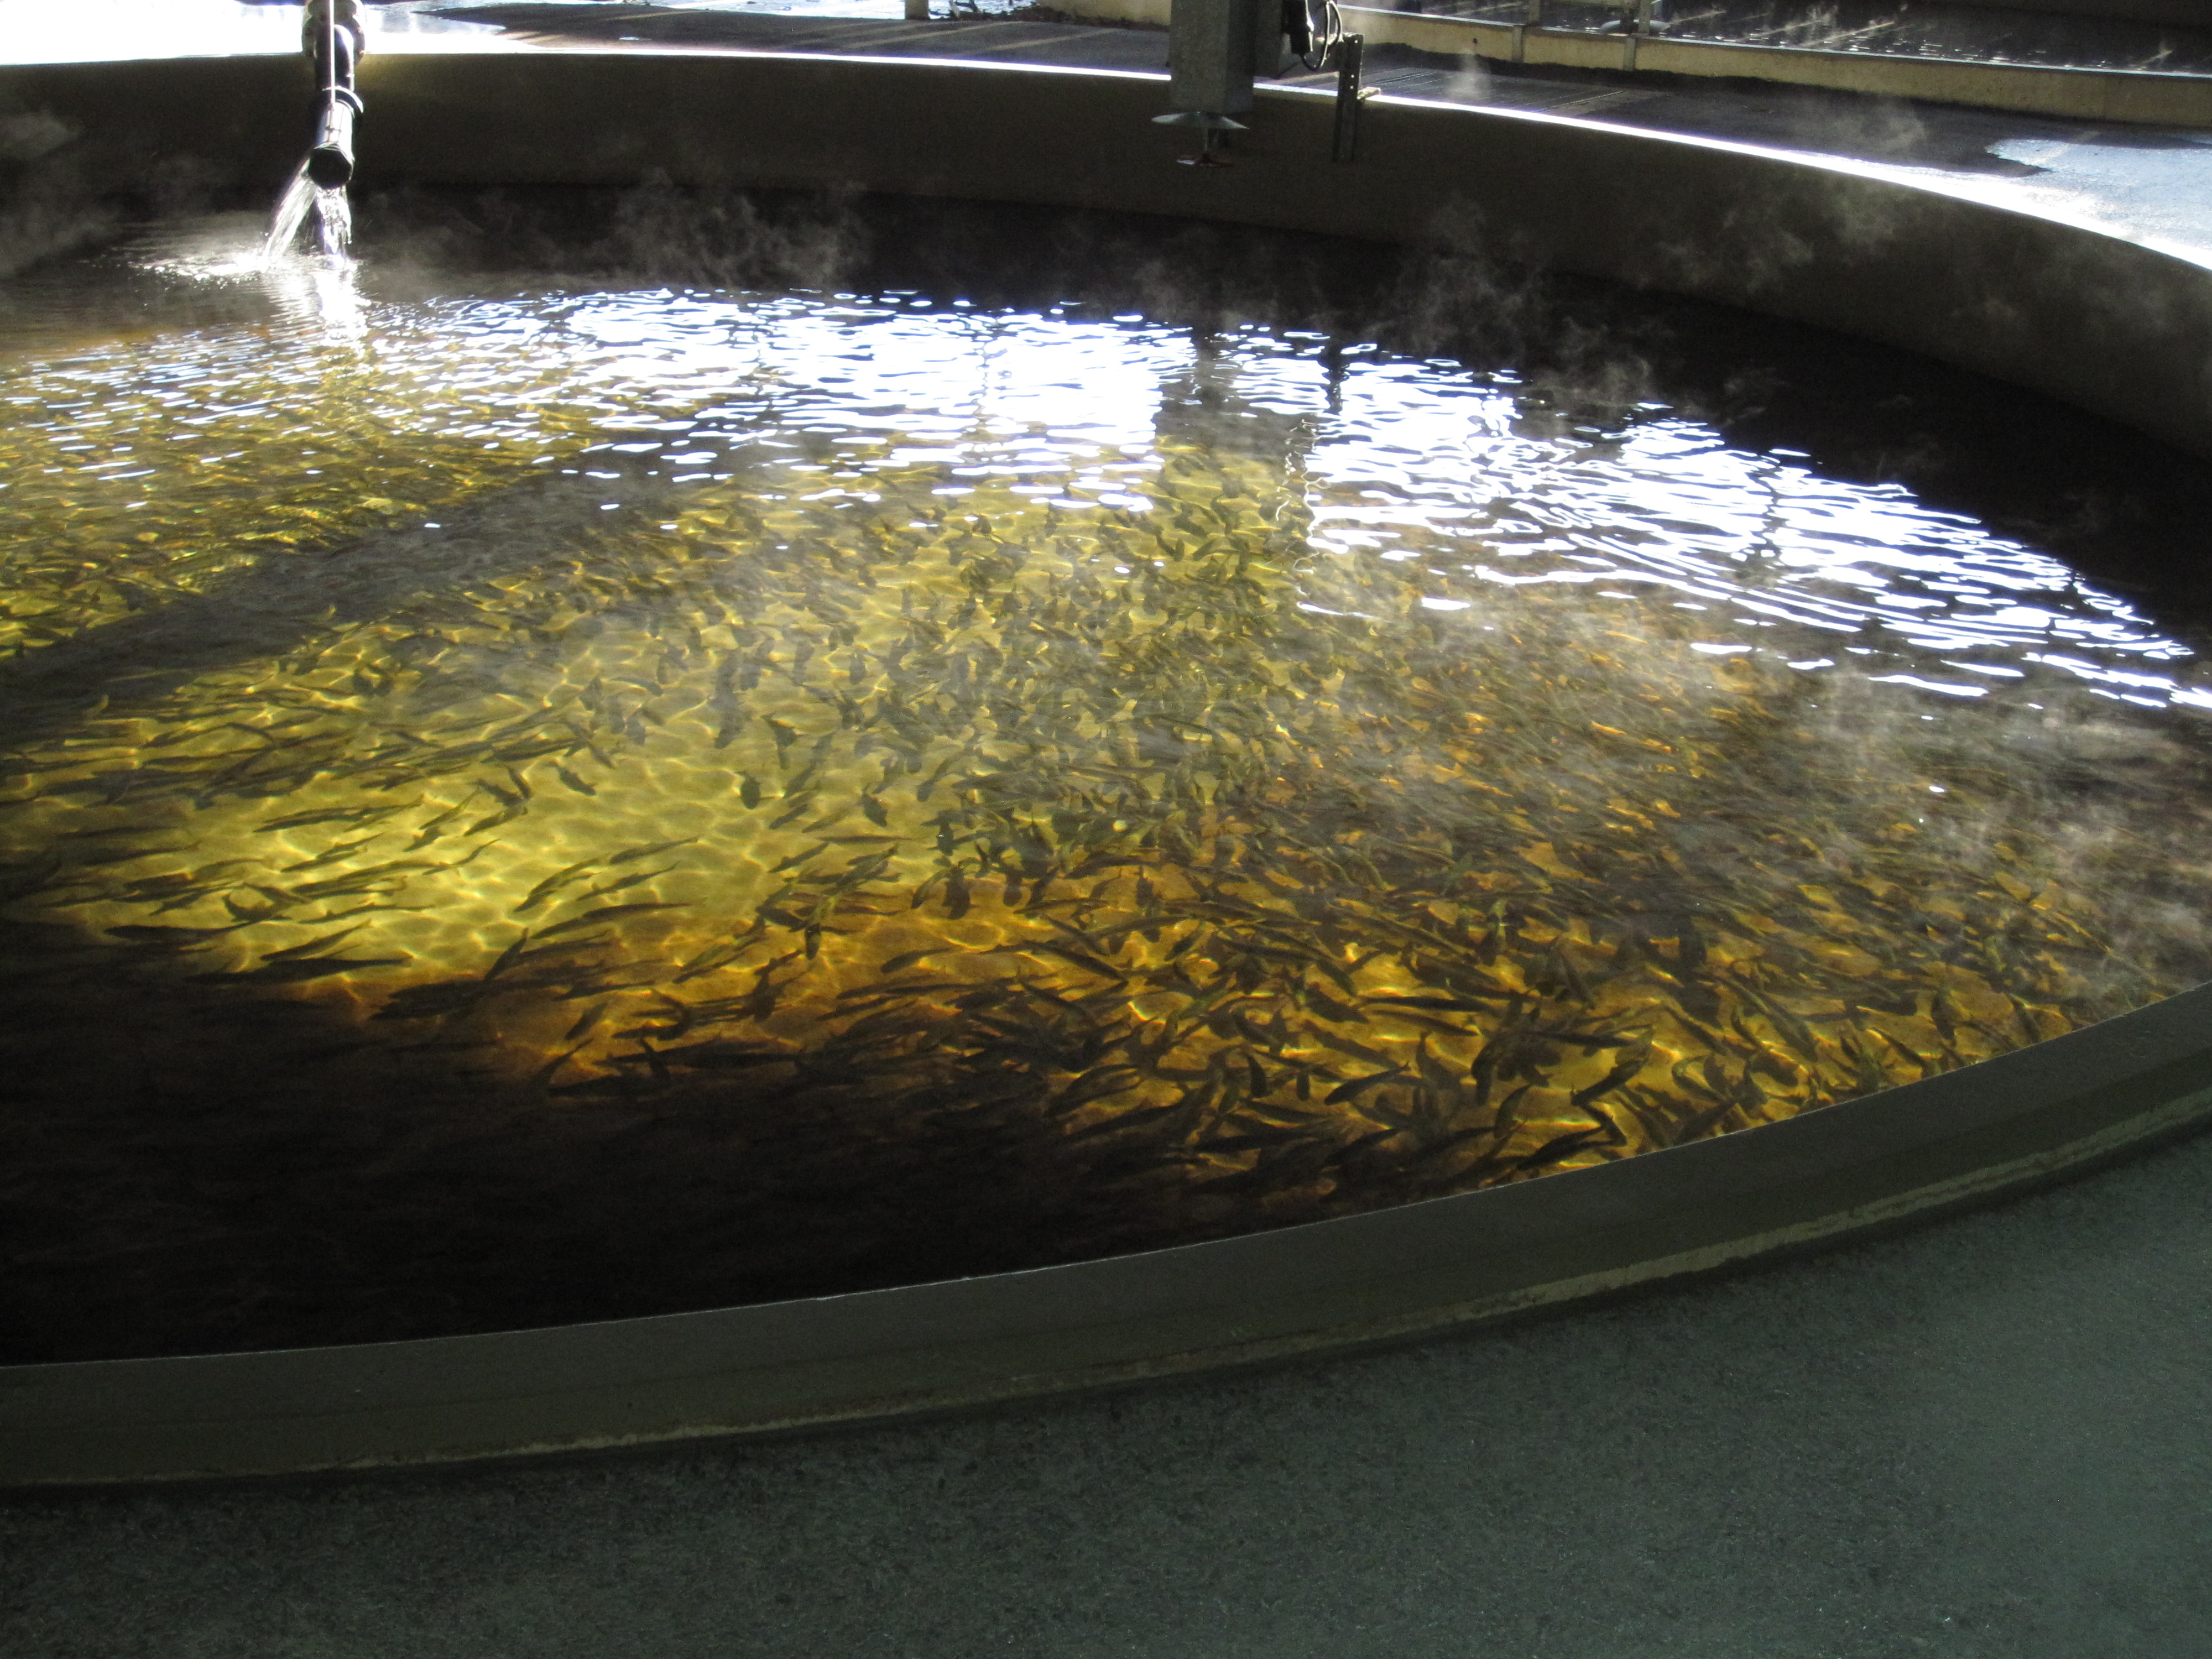 Hatchery pool full of Atlantic salmon smolts